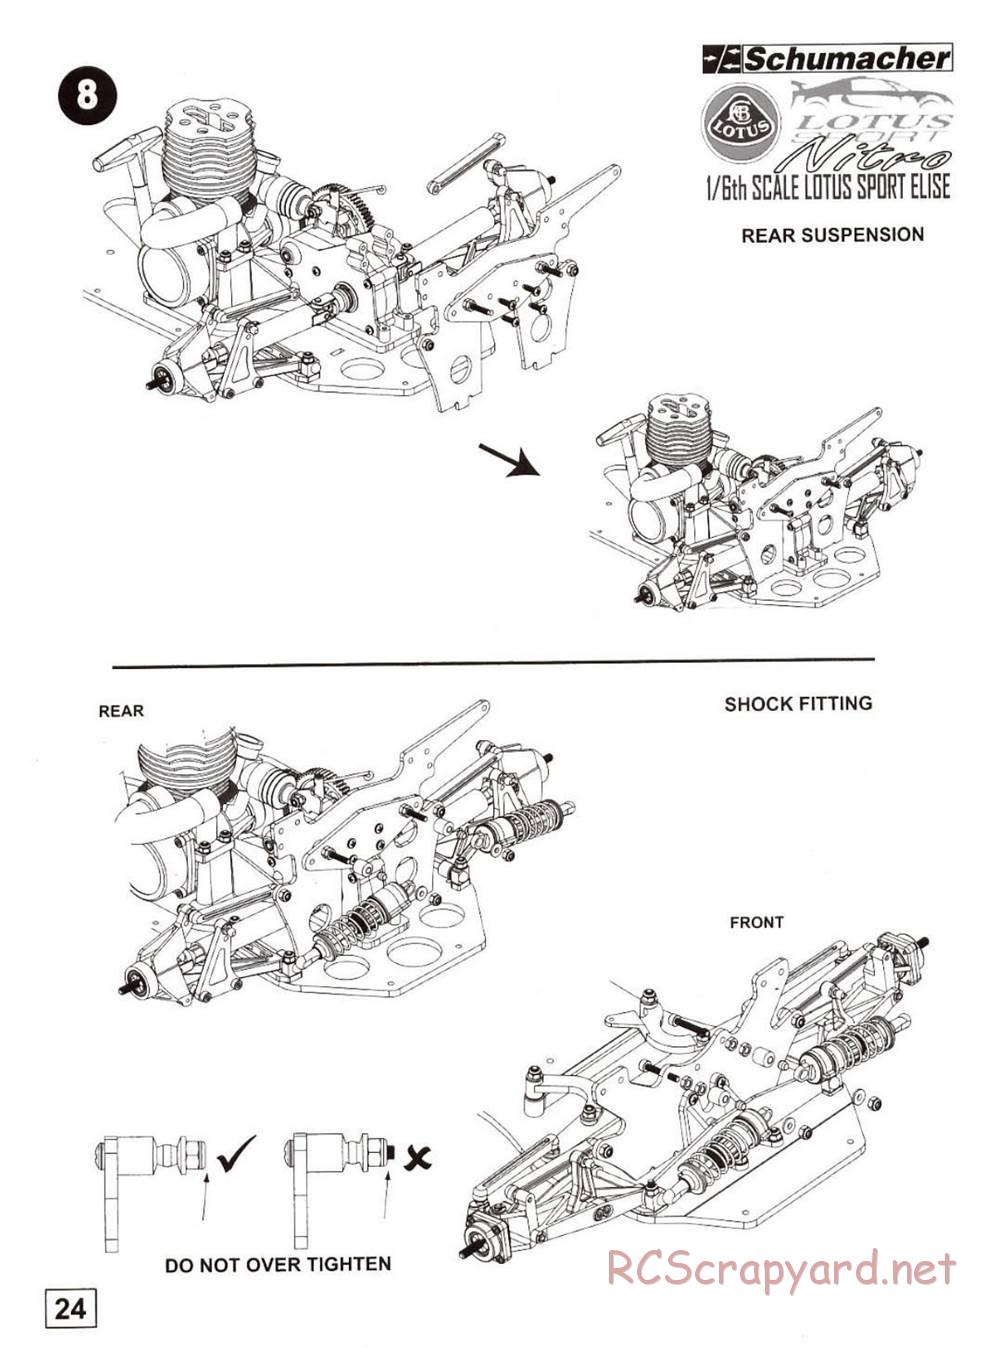 Schumacher - Big 6 Lotus Nitro - Manual - Page 19